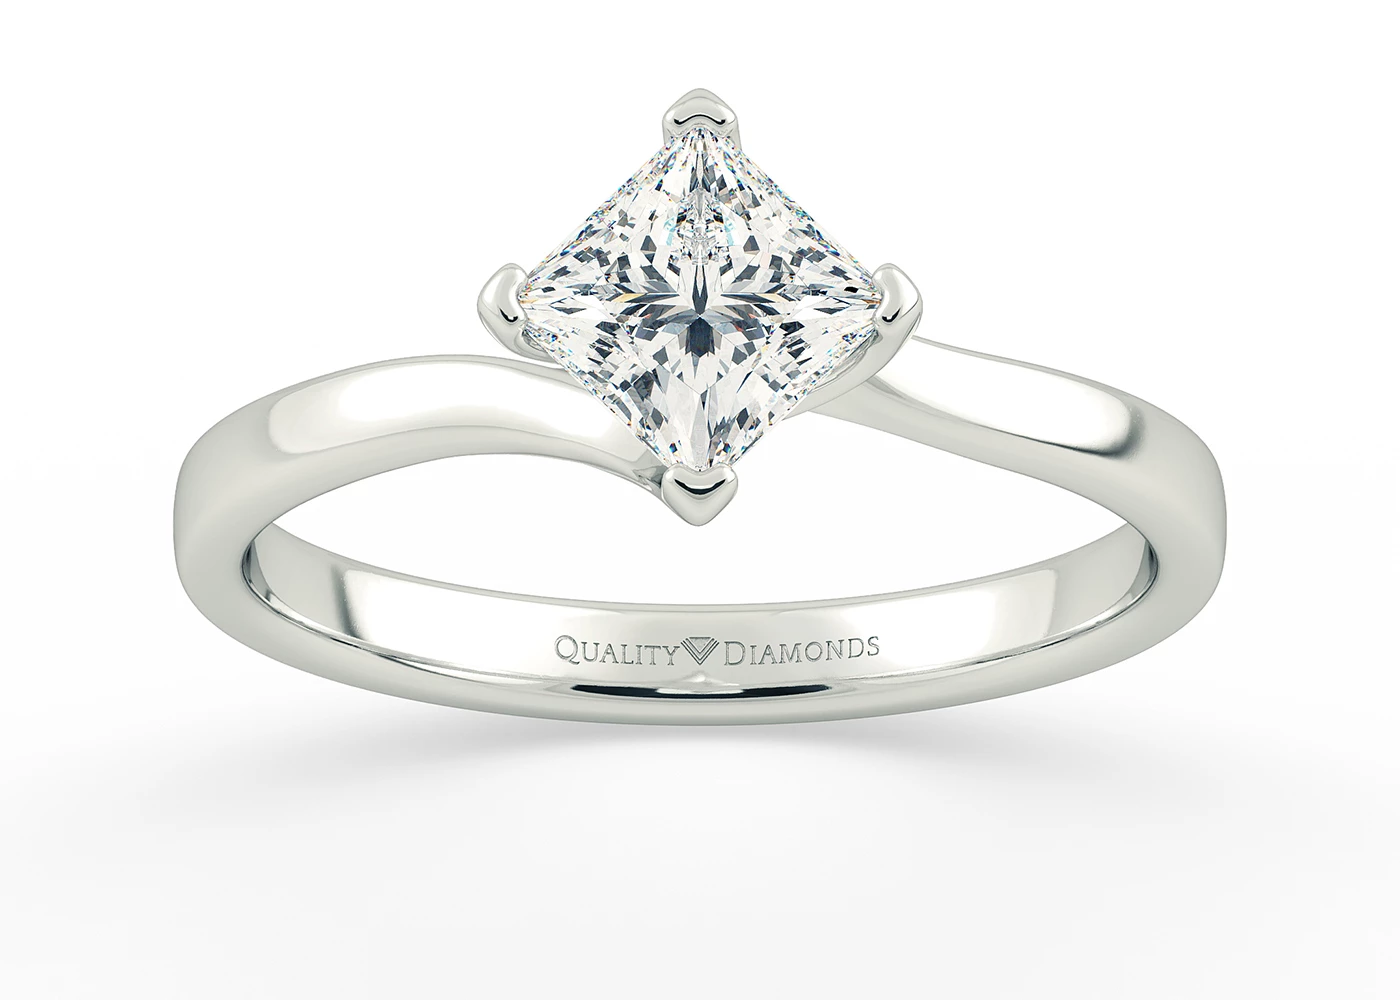 Princess Cura Diamond Ring in 18K White Gold